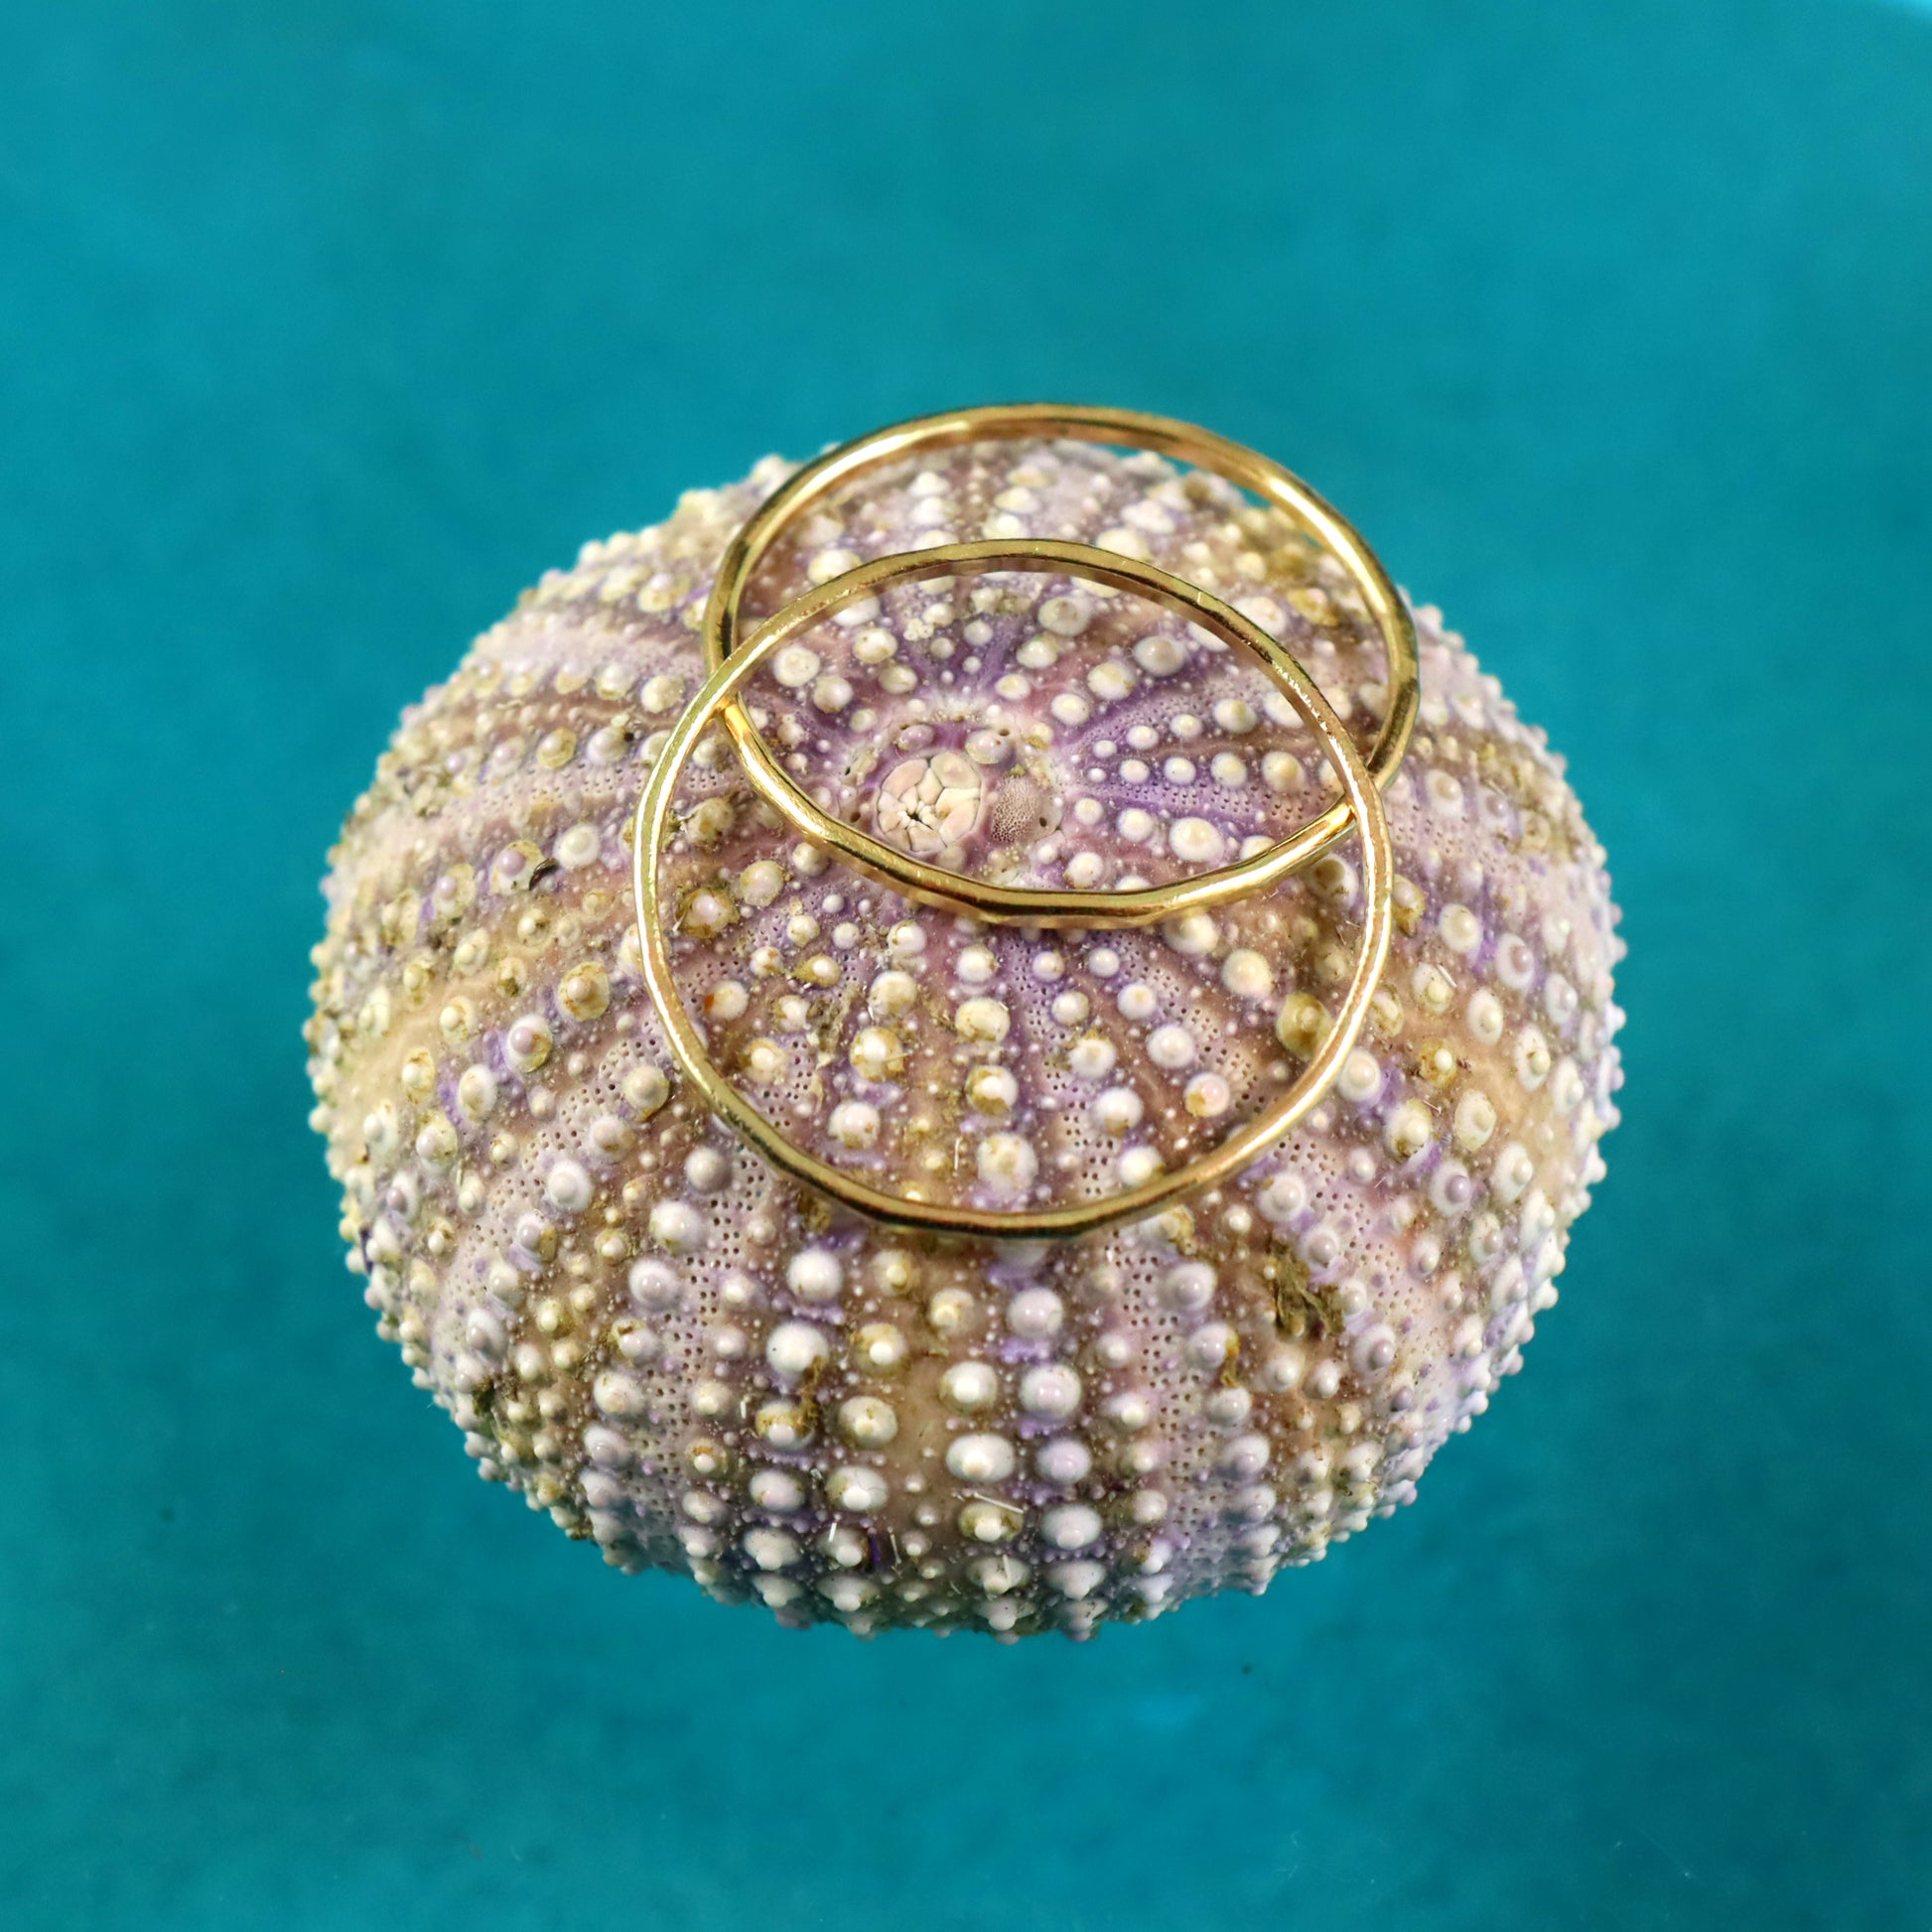 9ct Gold  hammered ring - Karen Morrison Jewellery